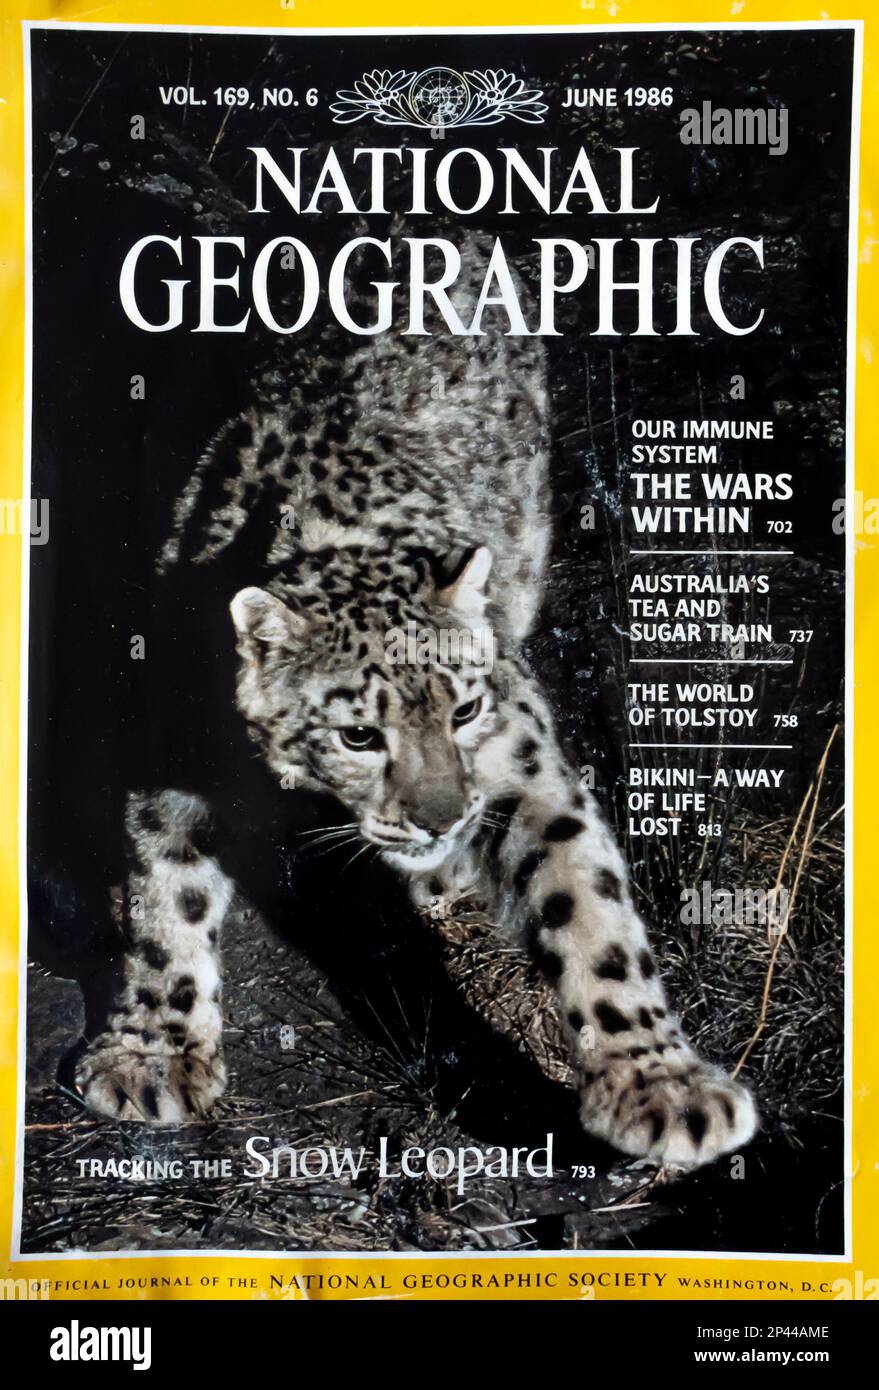 national geographic magazine cover animals